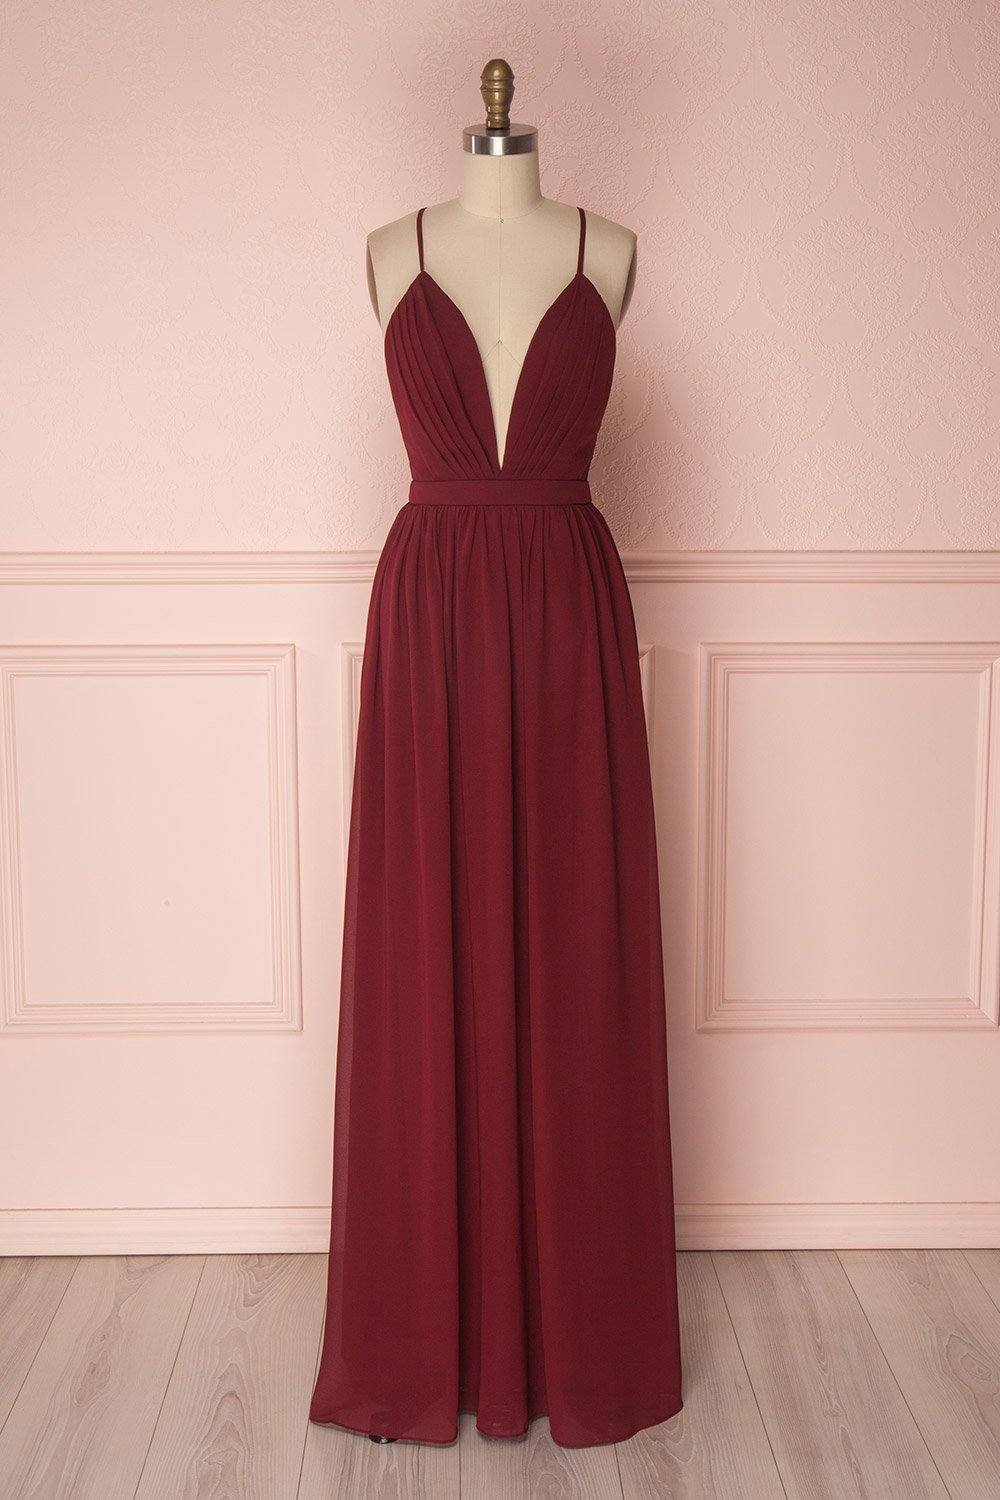 Simple burgundy chiffon long prom dress burgundy formal dress - RongMoon